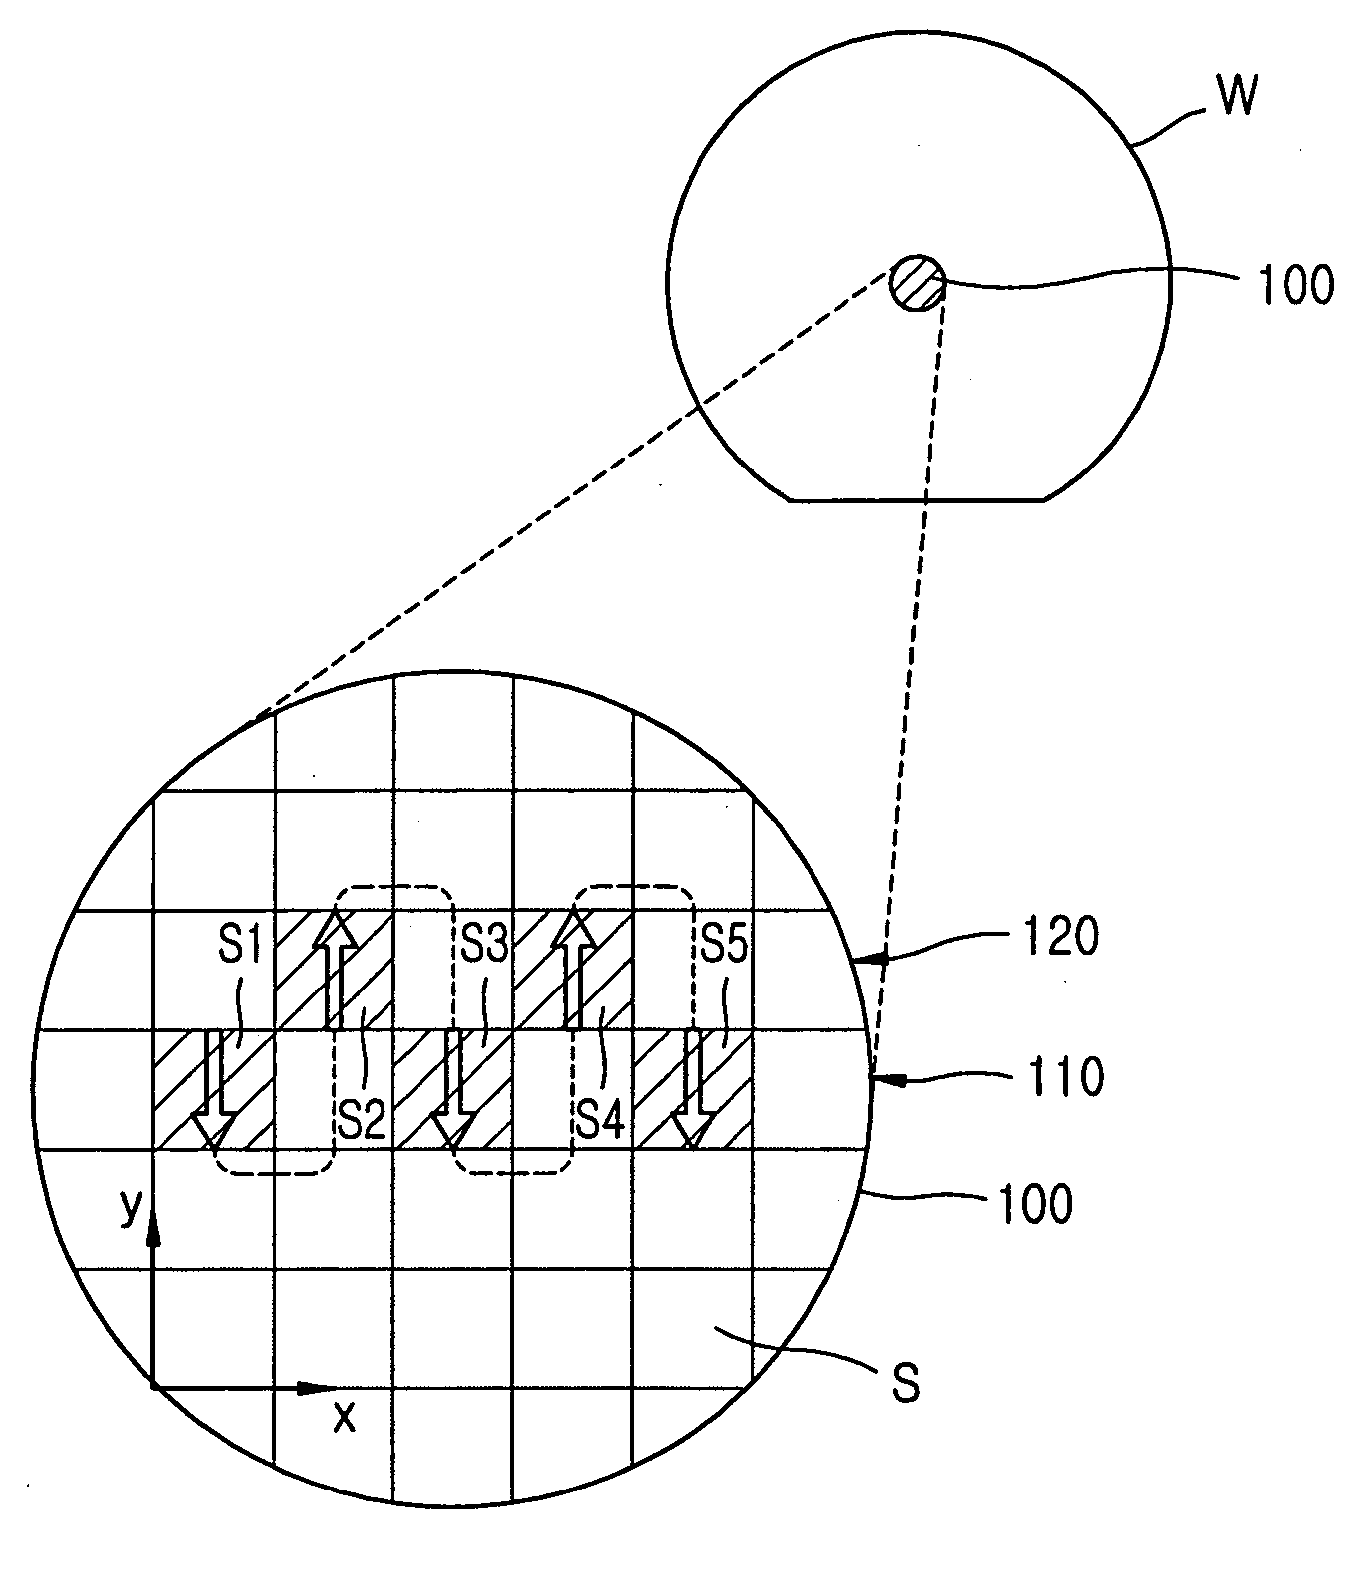 Method of exposing wafer using scan-type exposure apparatus